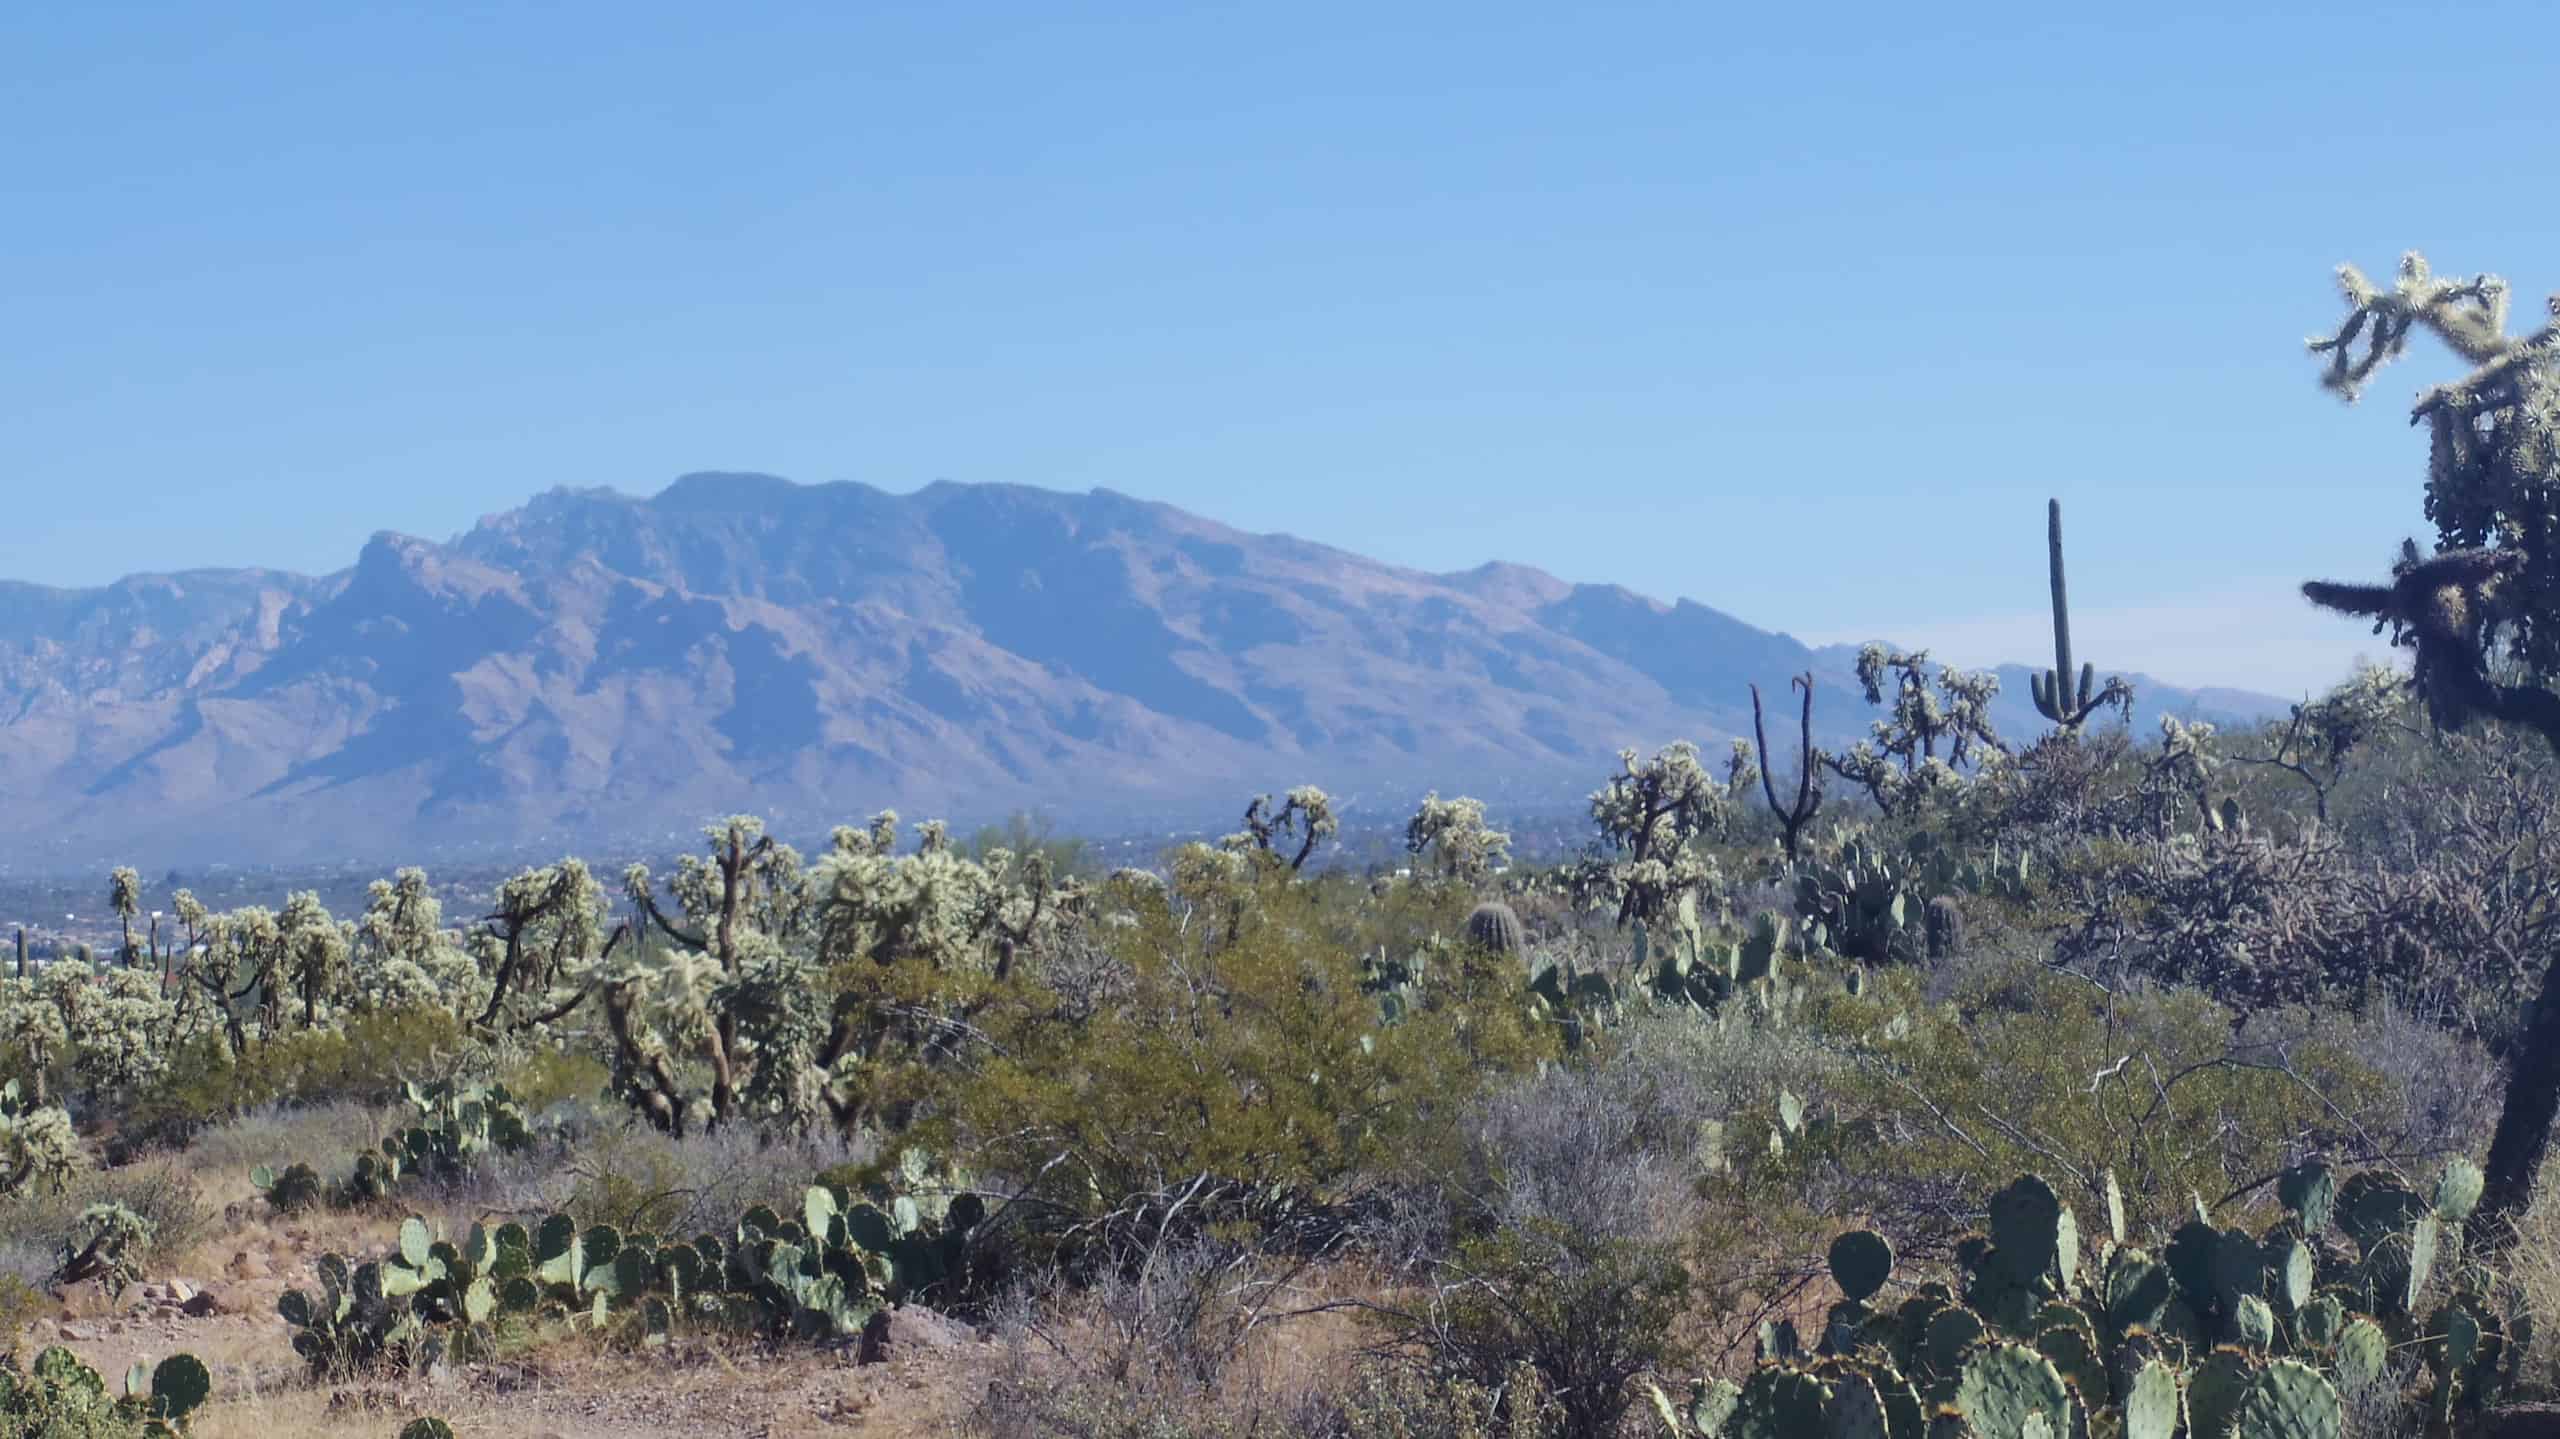 View of Mount Lemmon from West Saguaro National Park near Tucson, Arizona